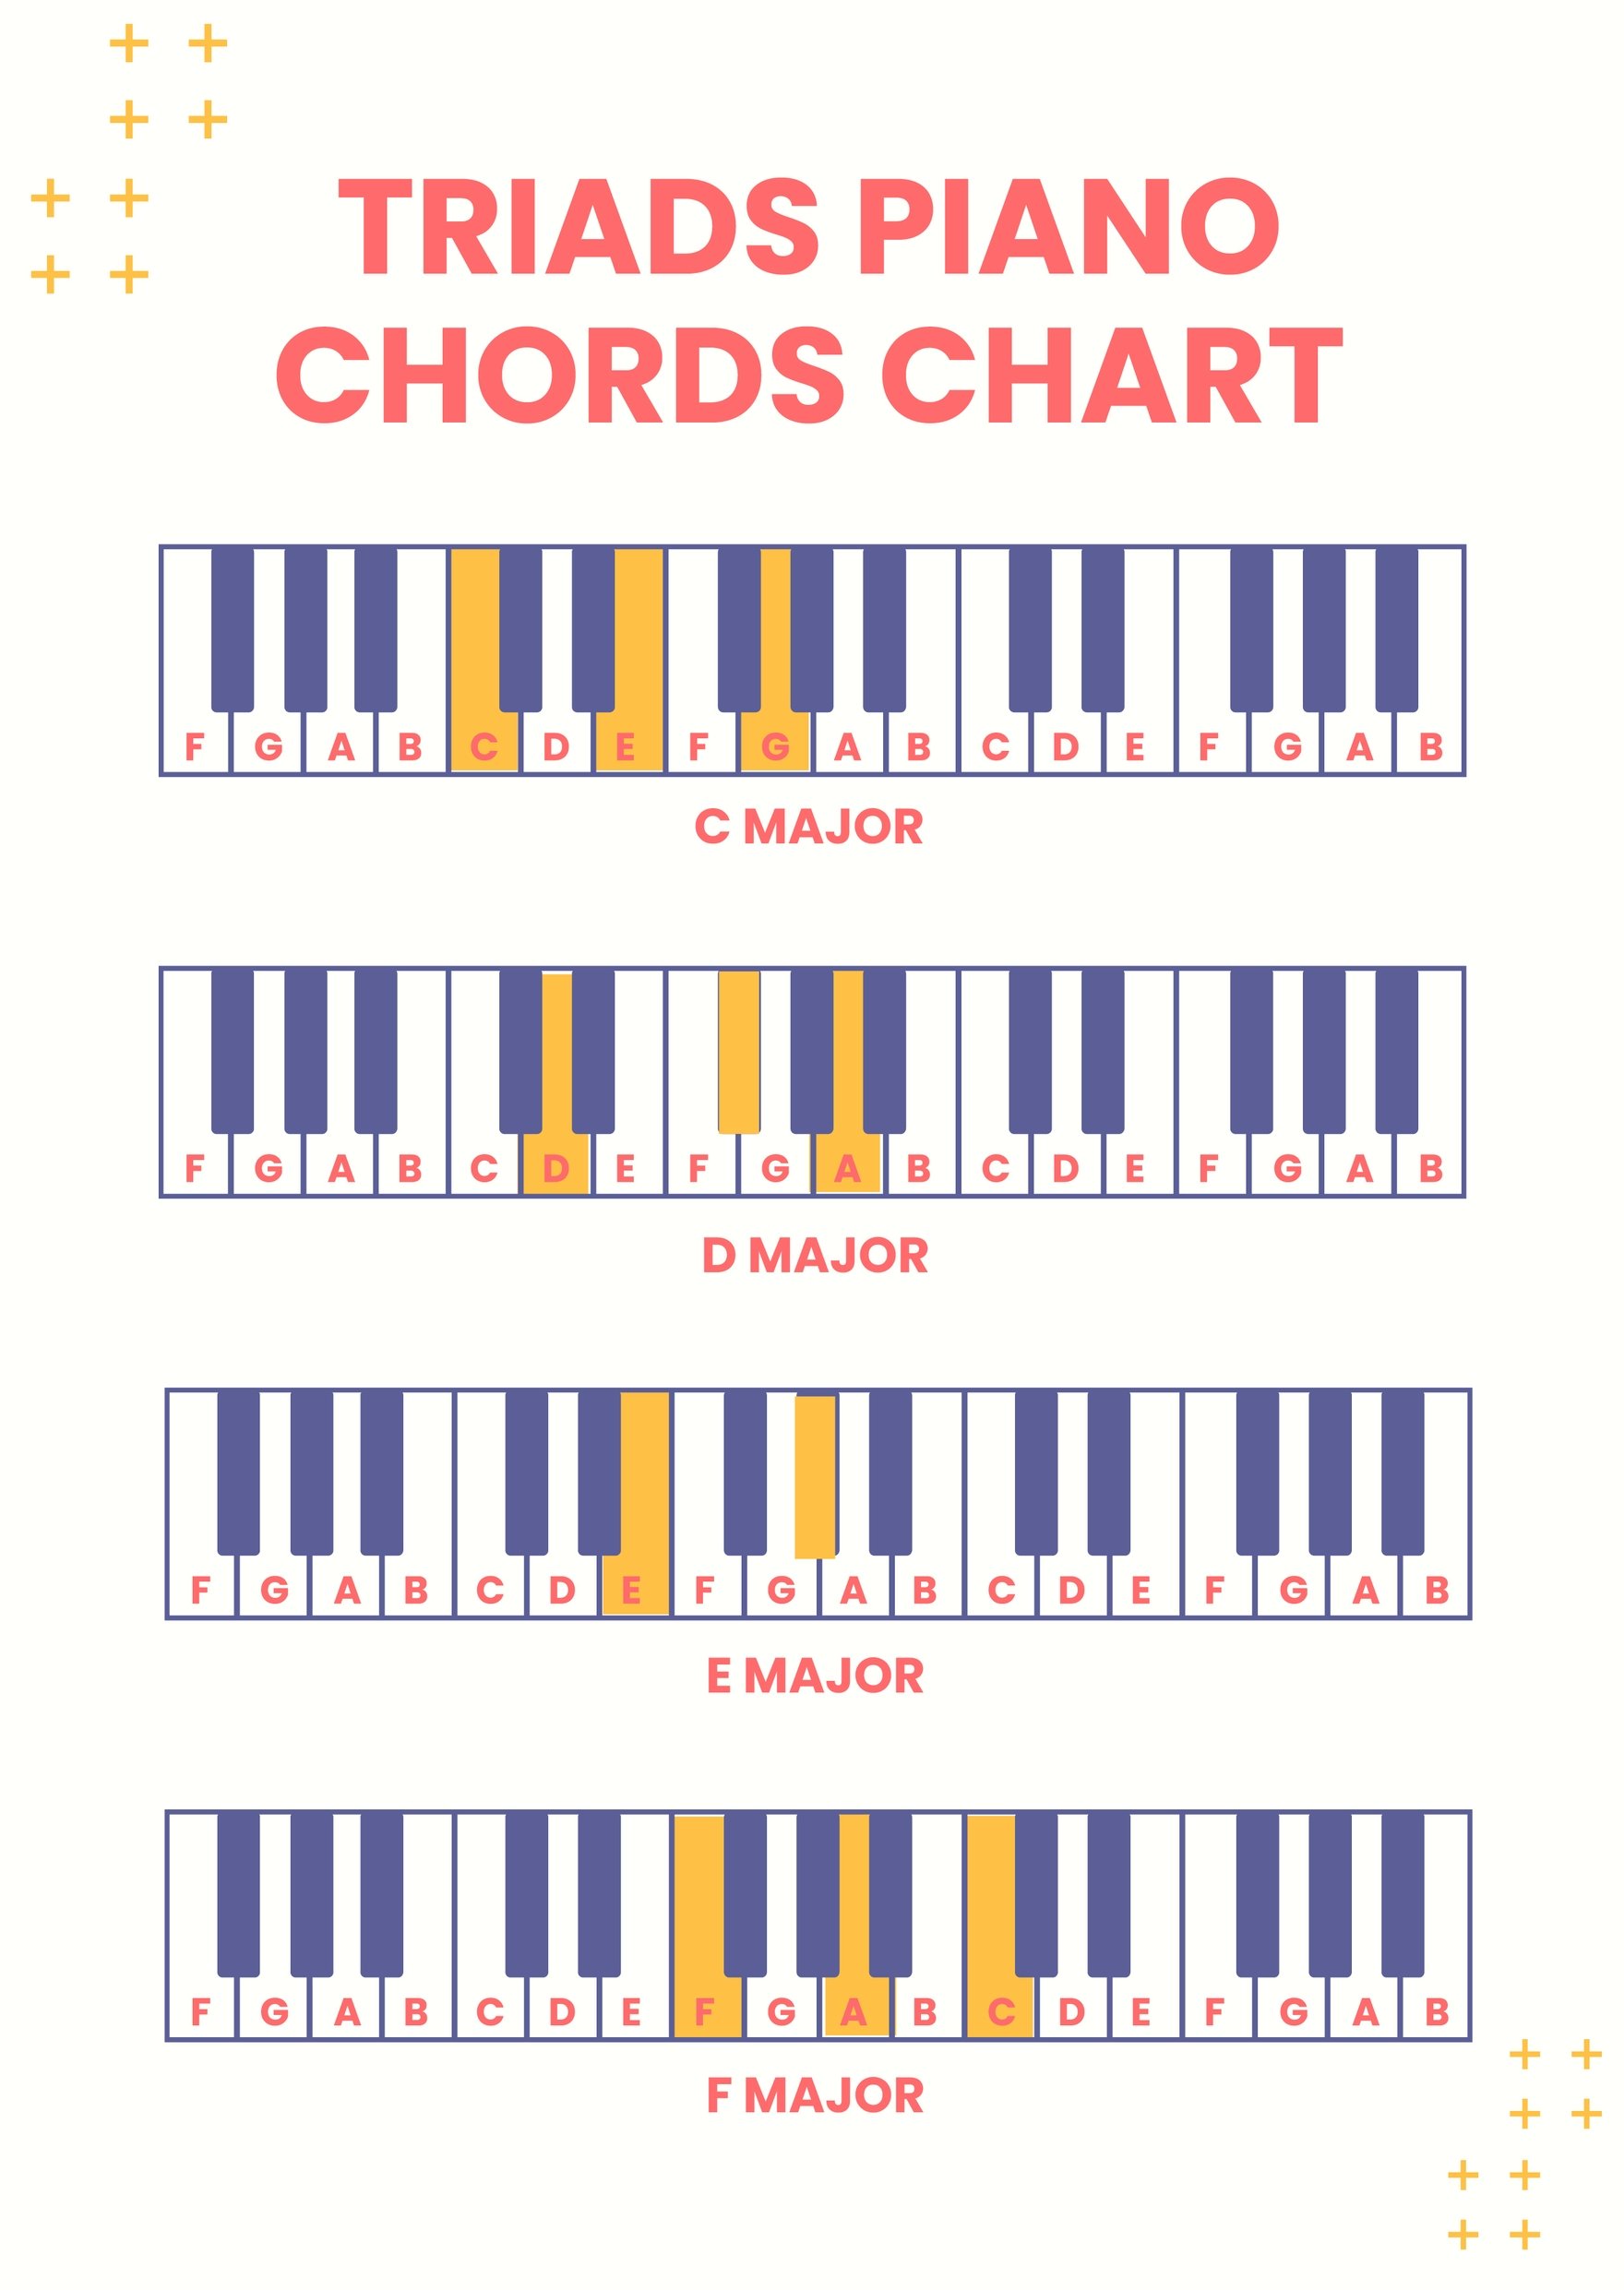 Triads Piano Chords Chart in PDF, Illustrator